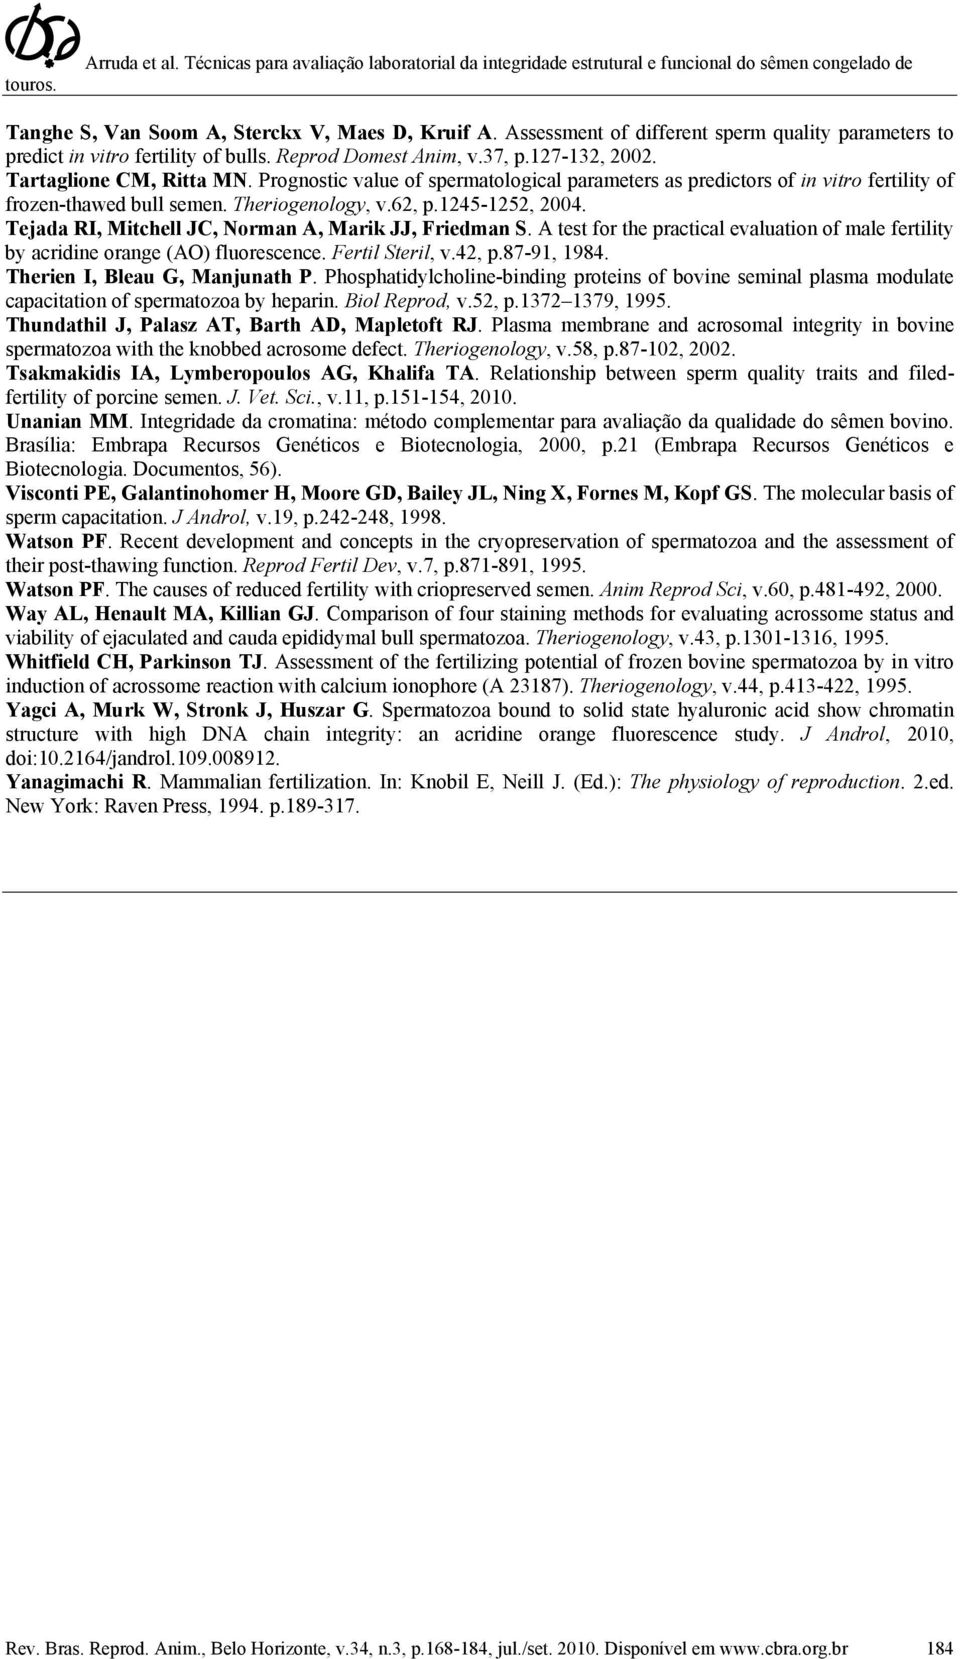 Tejada RI, Mitchell JC, Norman A, Marik JJ, Friedman S. A test for the practical evaluation of male fertility by acridine orange (AO) fluorescence. Fertil Steril, v.42, p.87-91, 1984.